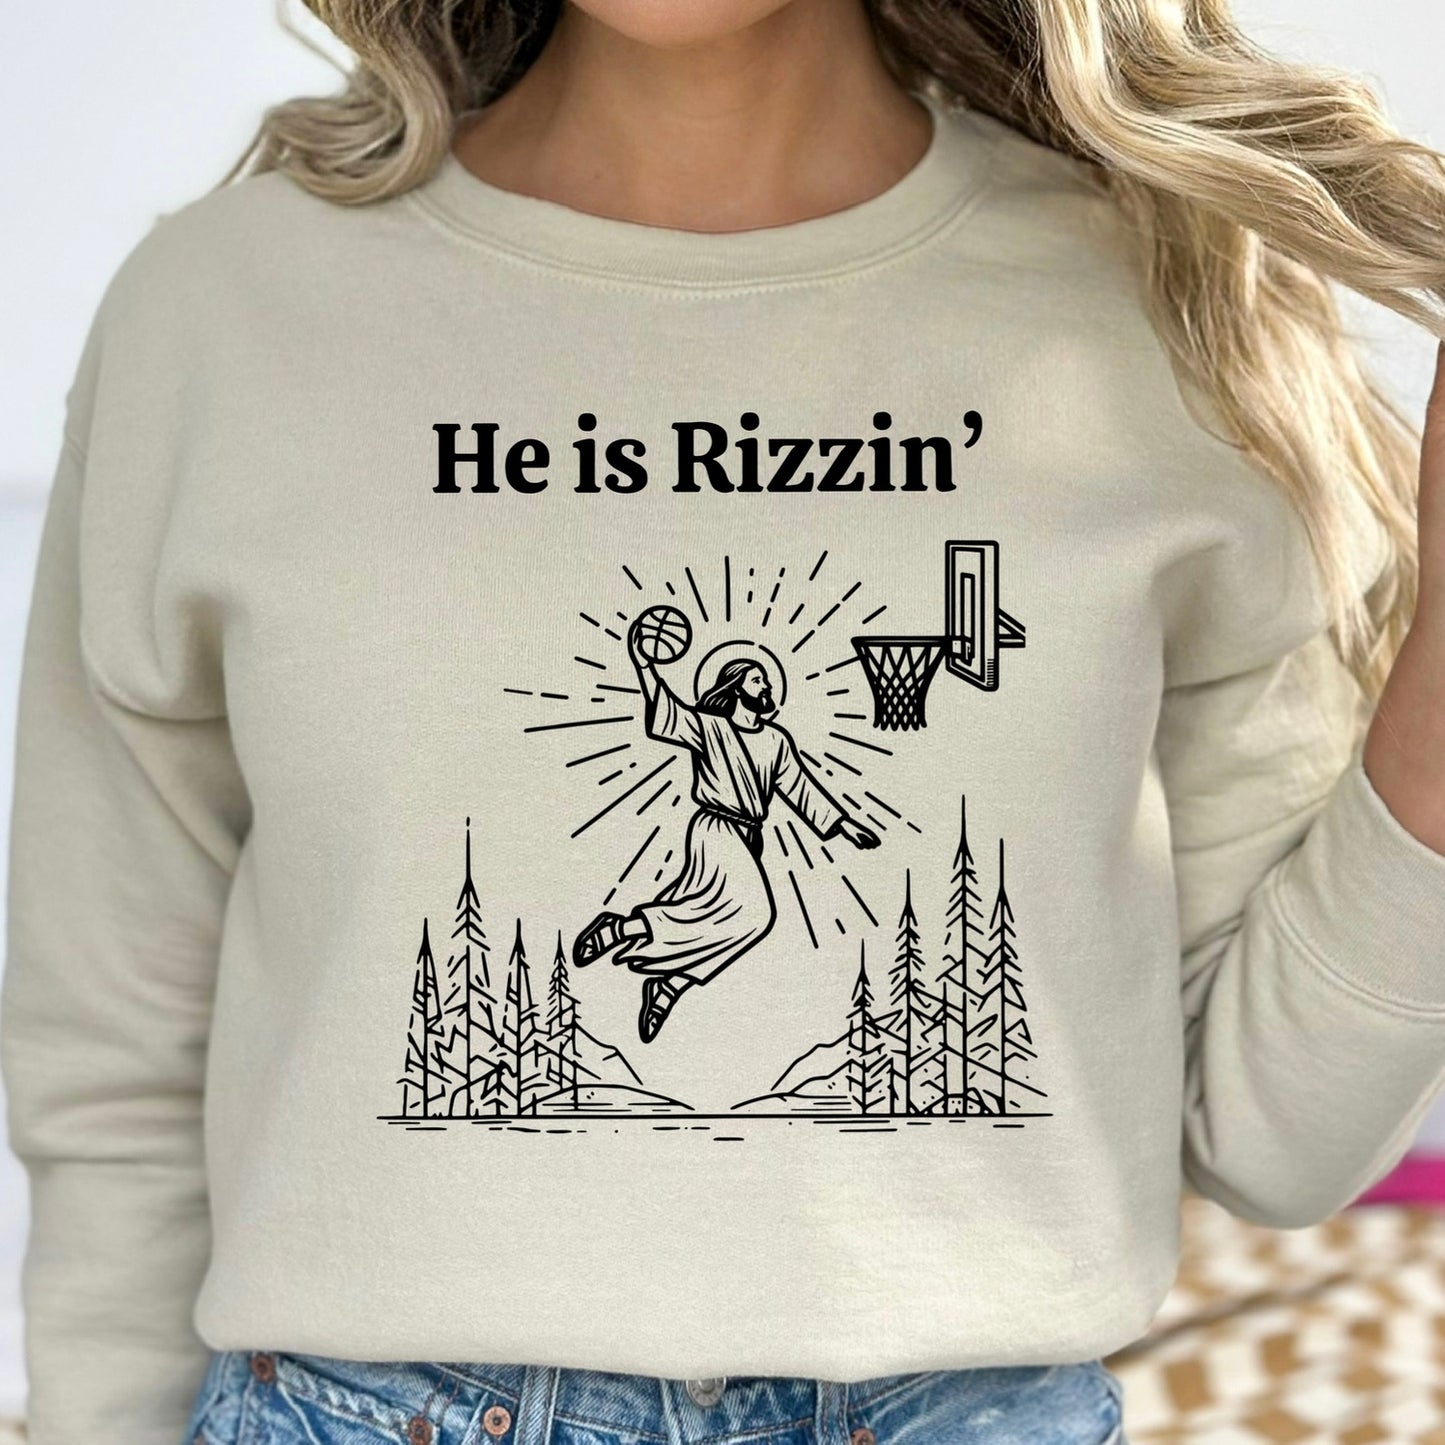 He is Rizzin' screen print transfer